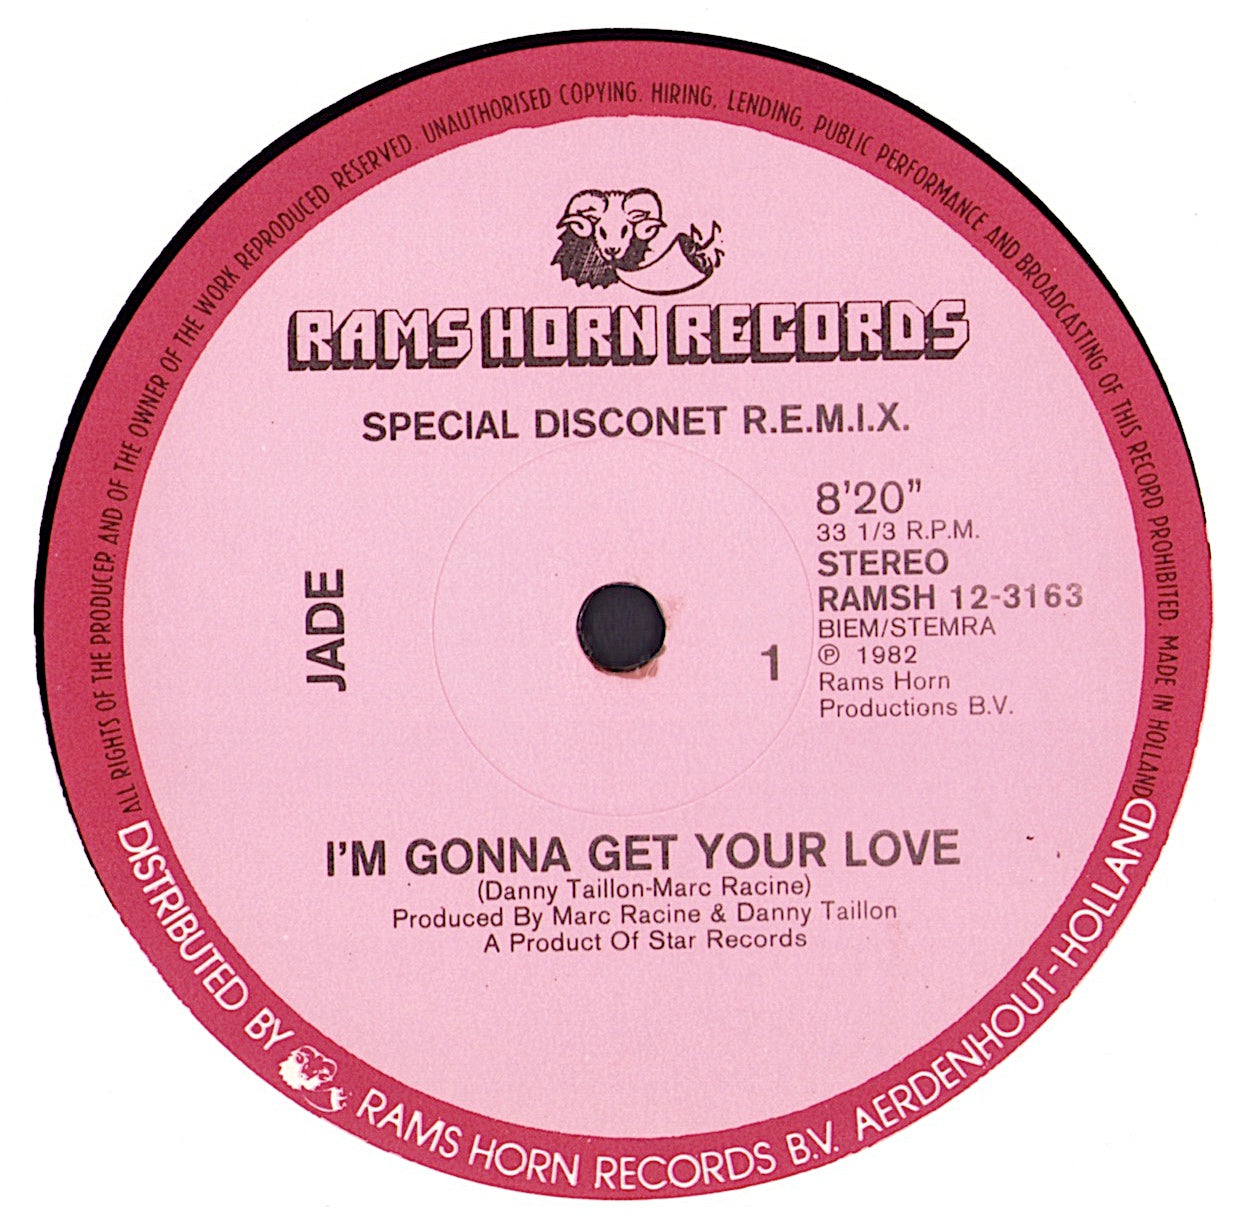 Jade - I'm Gonna Get Your Love Vinyl 12"